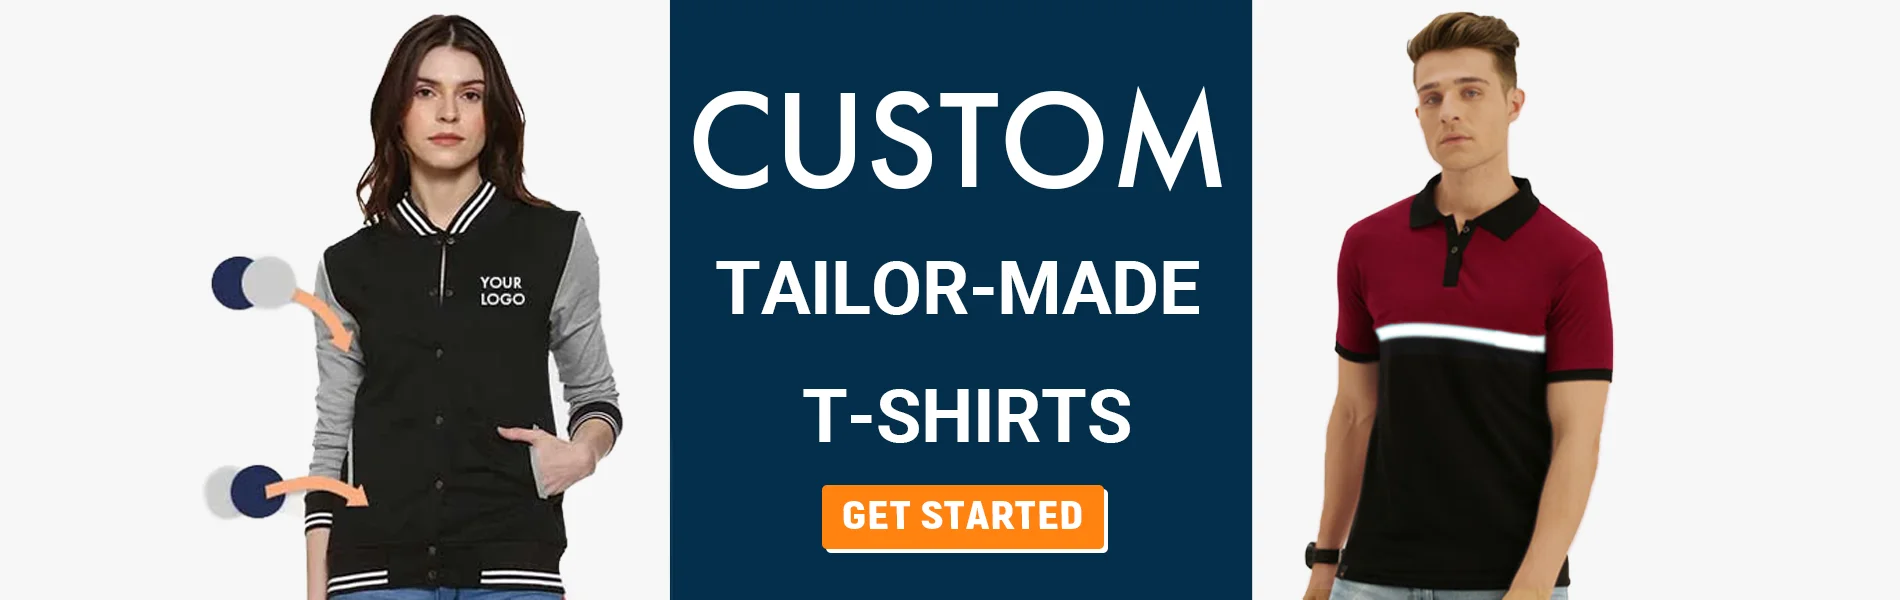 custom tailormade t-shirts shimla